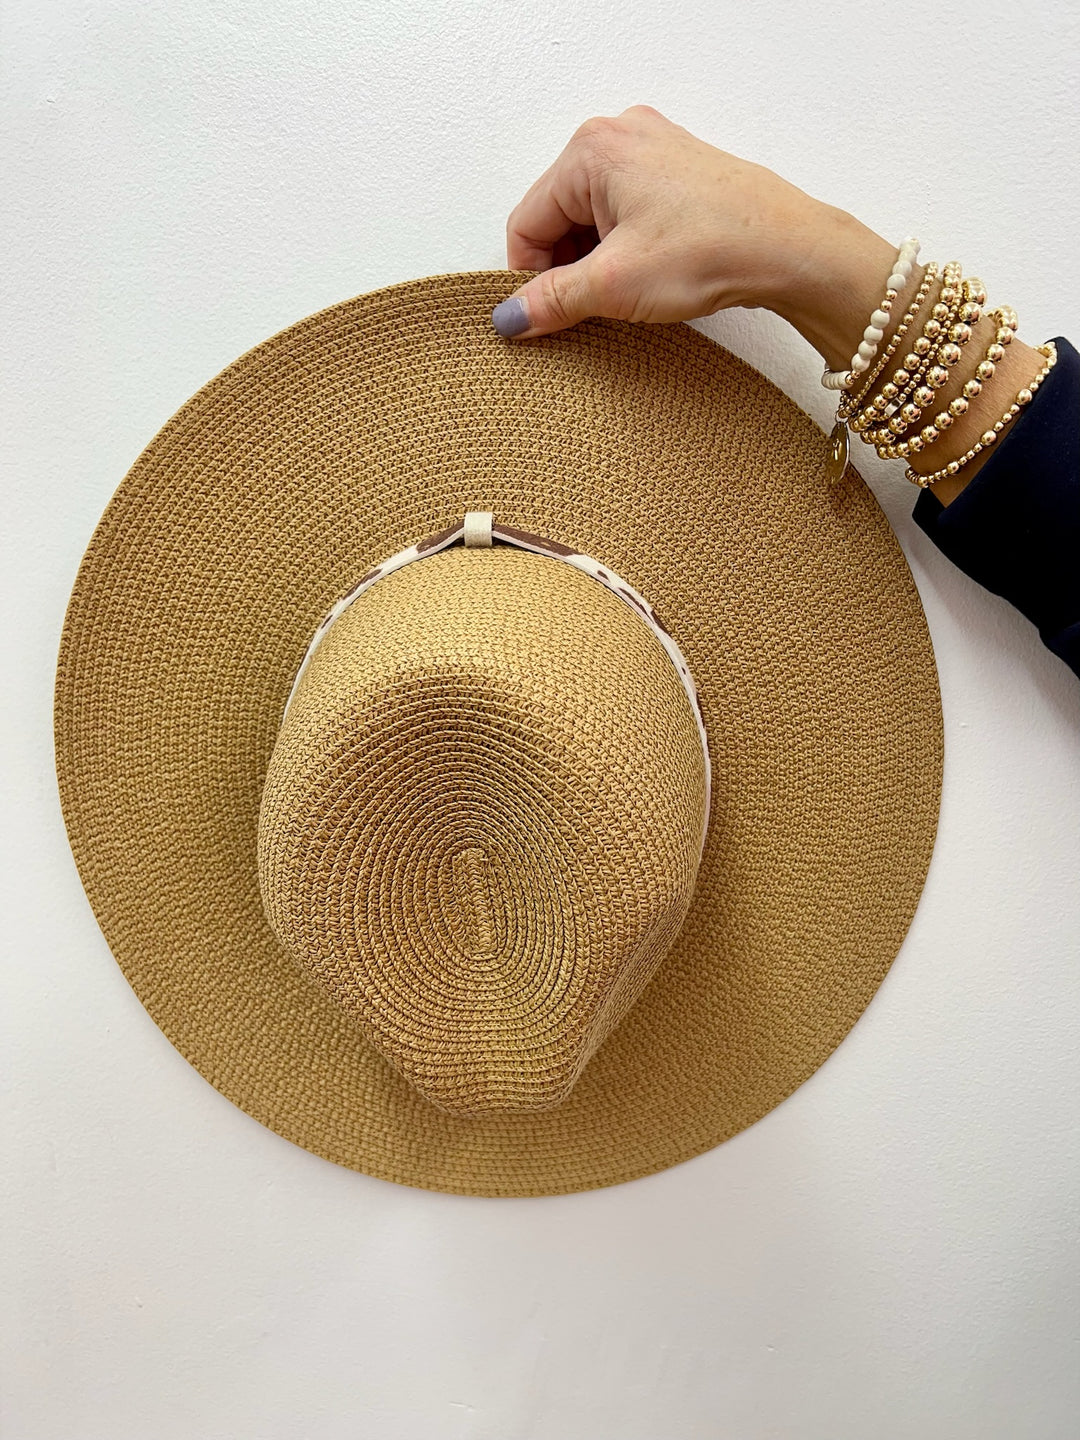 Panama Straw Hat